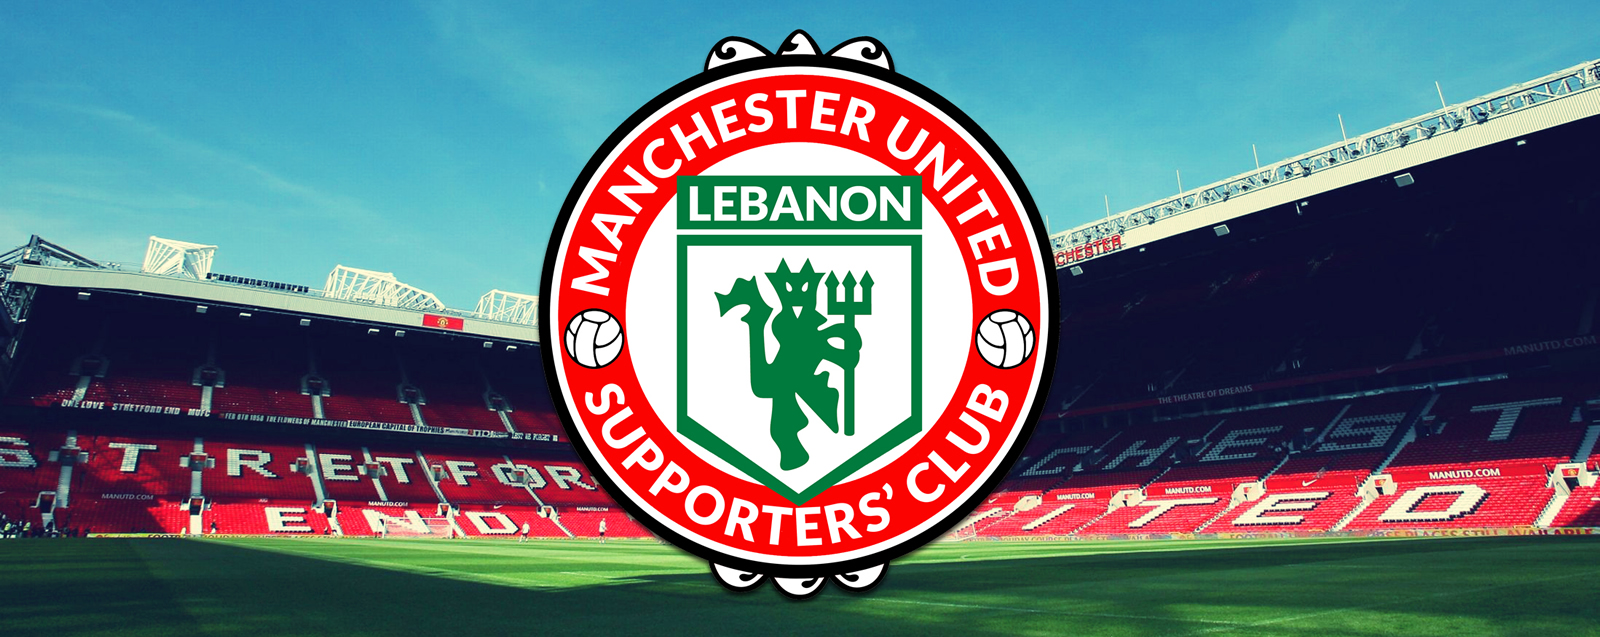 MAN UNITED LEBANON Supporters Website